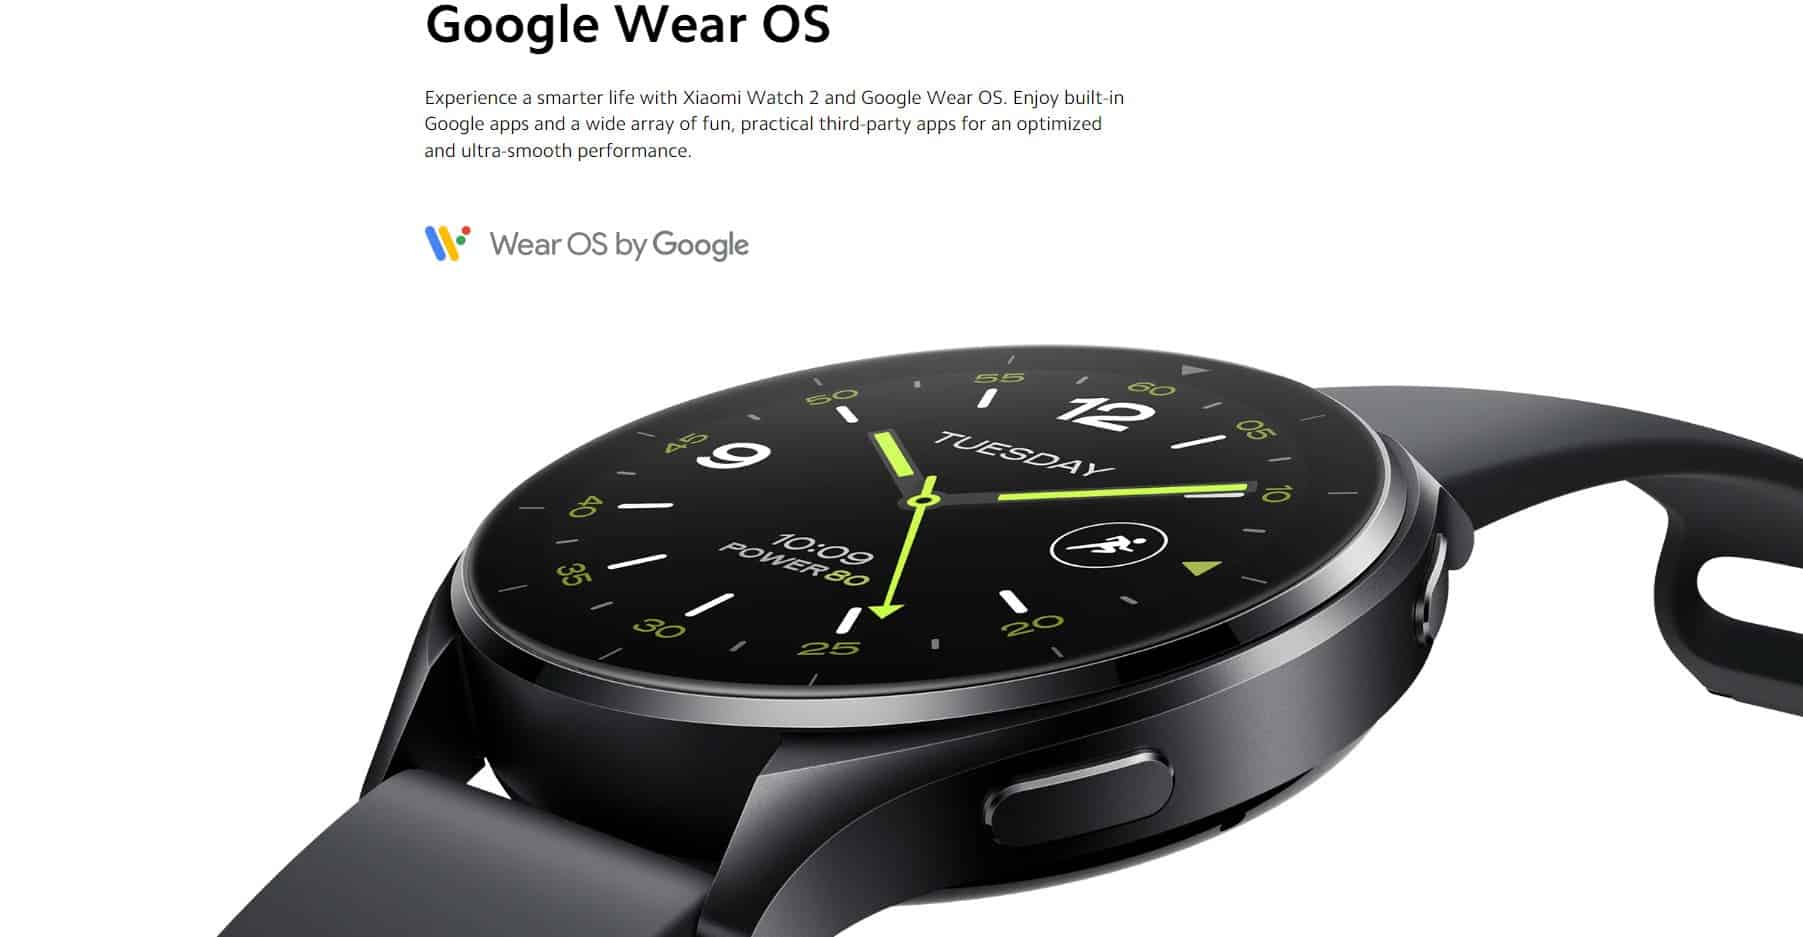 Google Wear OS on Xiaomi Watch 2